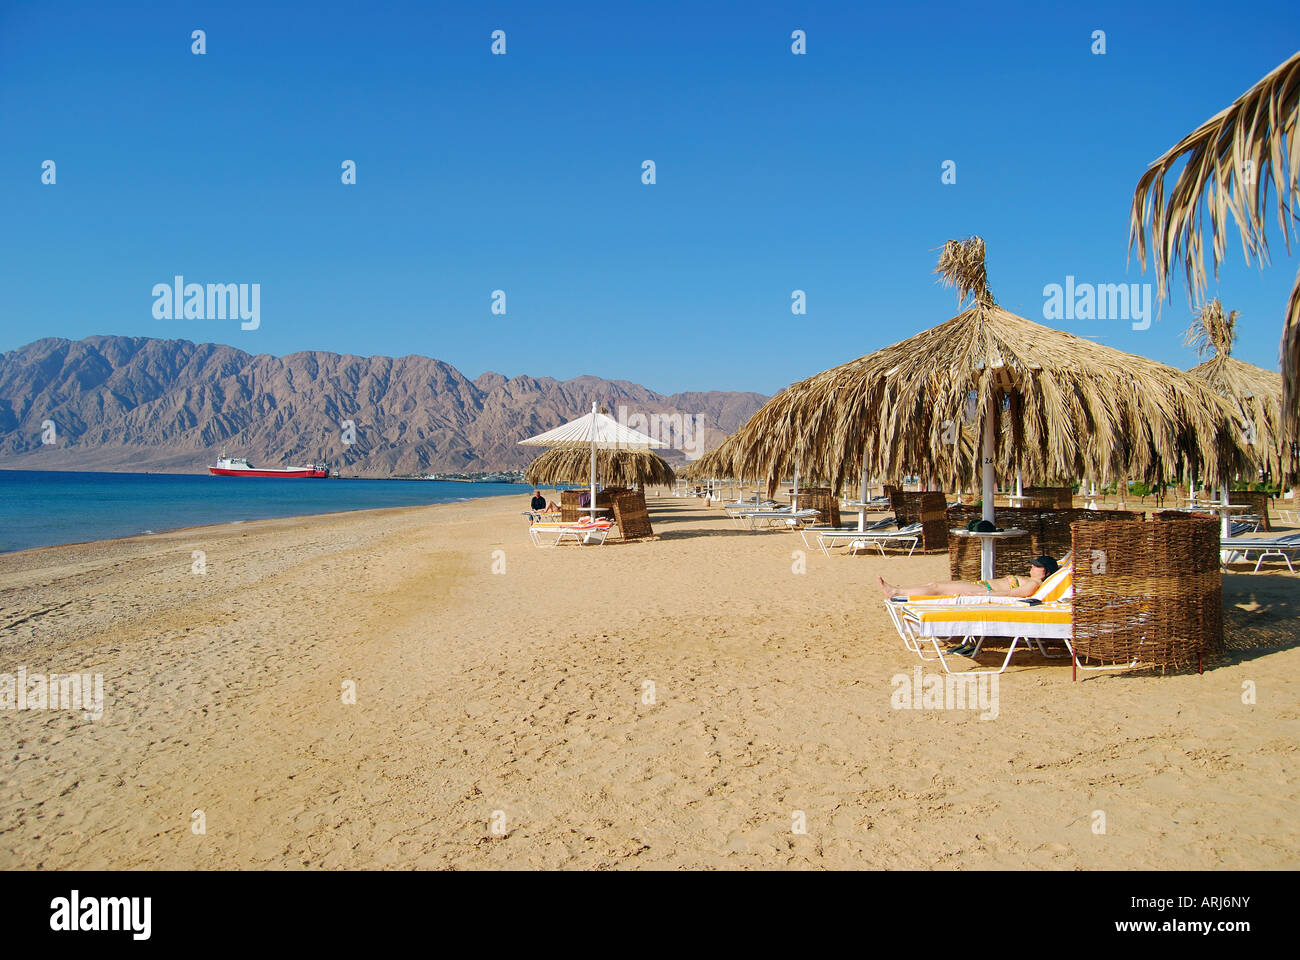 Hilton Nuweiba Coral Resort beach, Nuweiba, péninsule du Sinaï, Égypte Banque D'Images